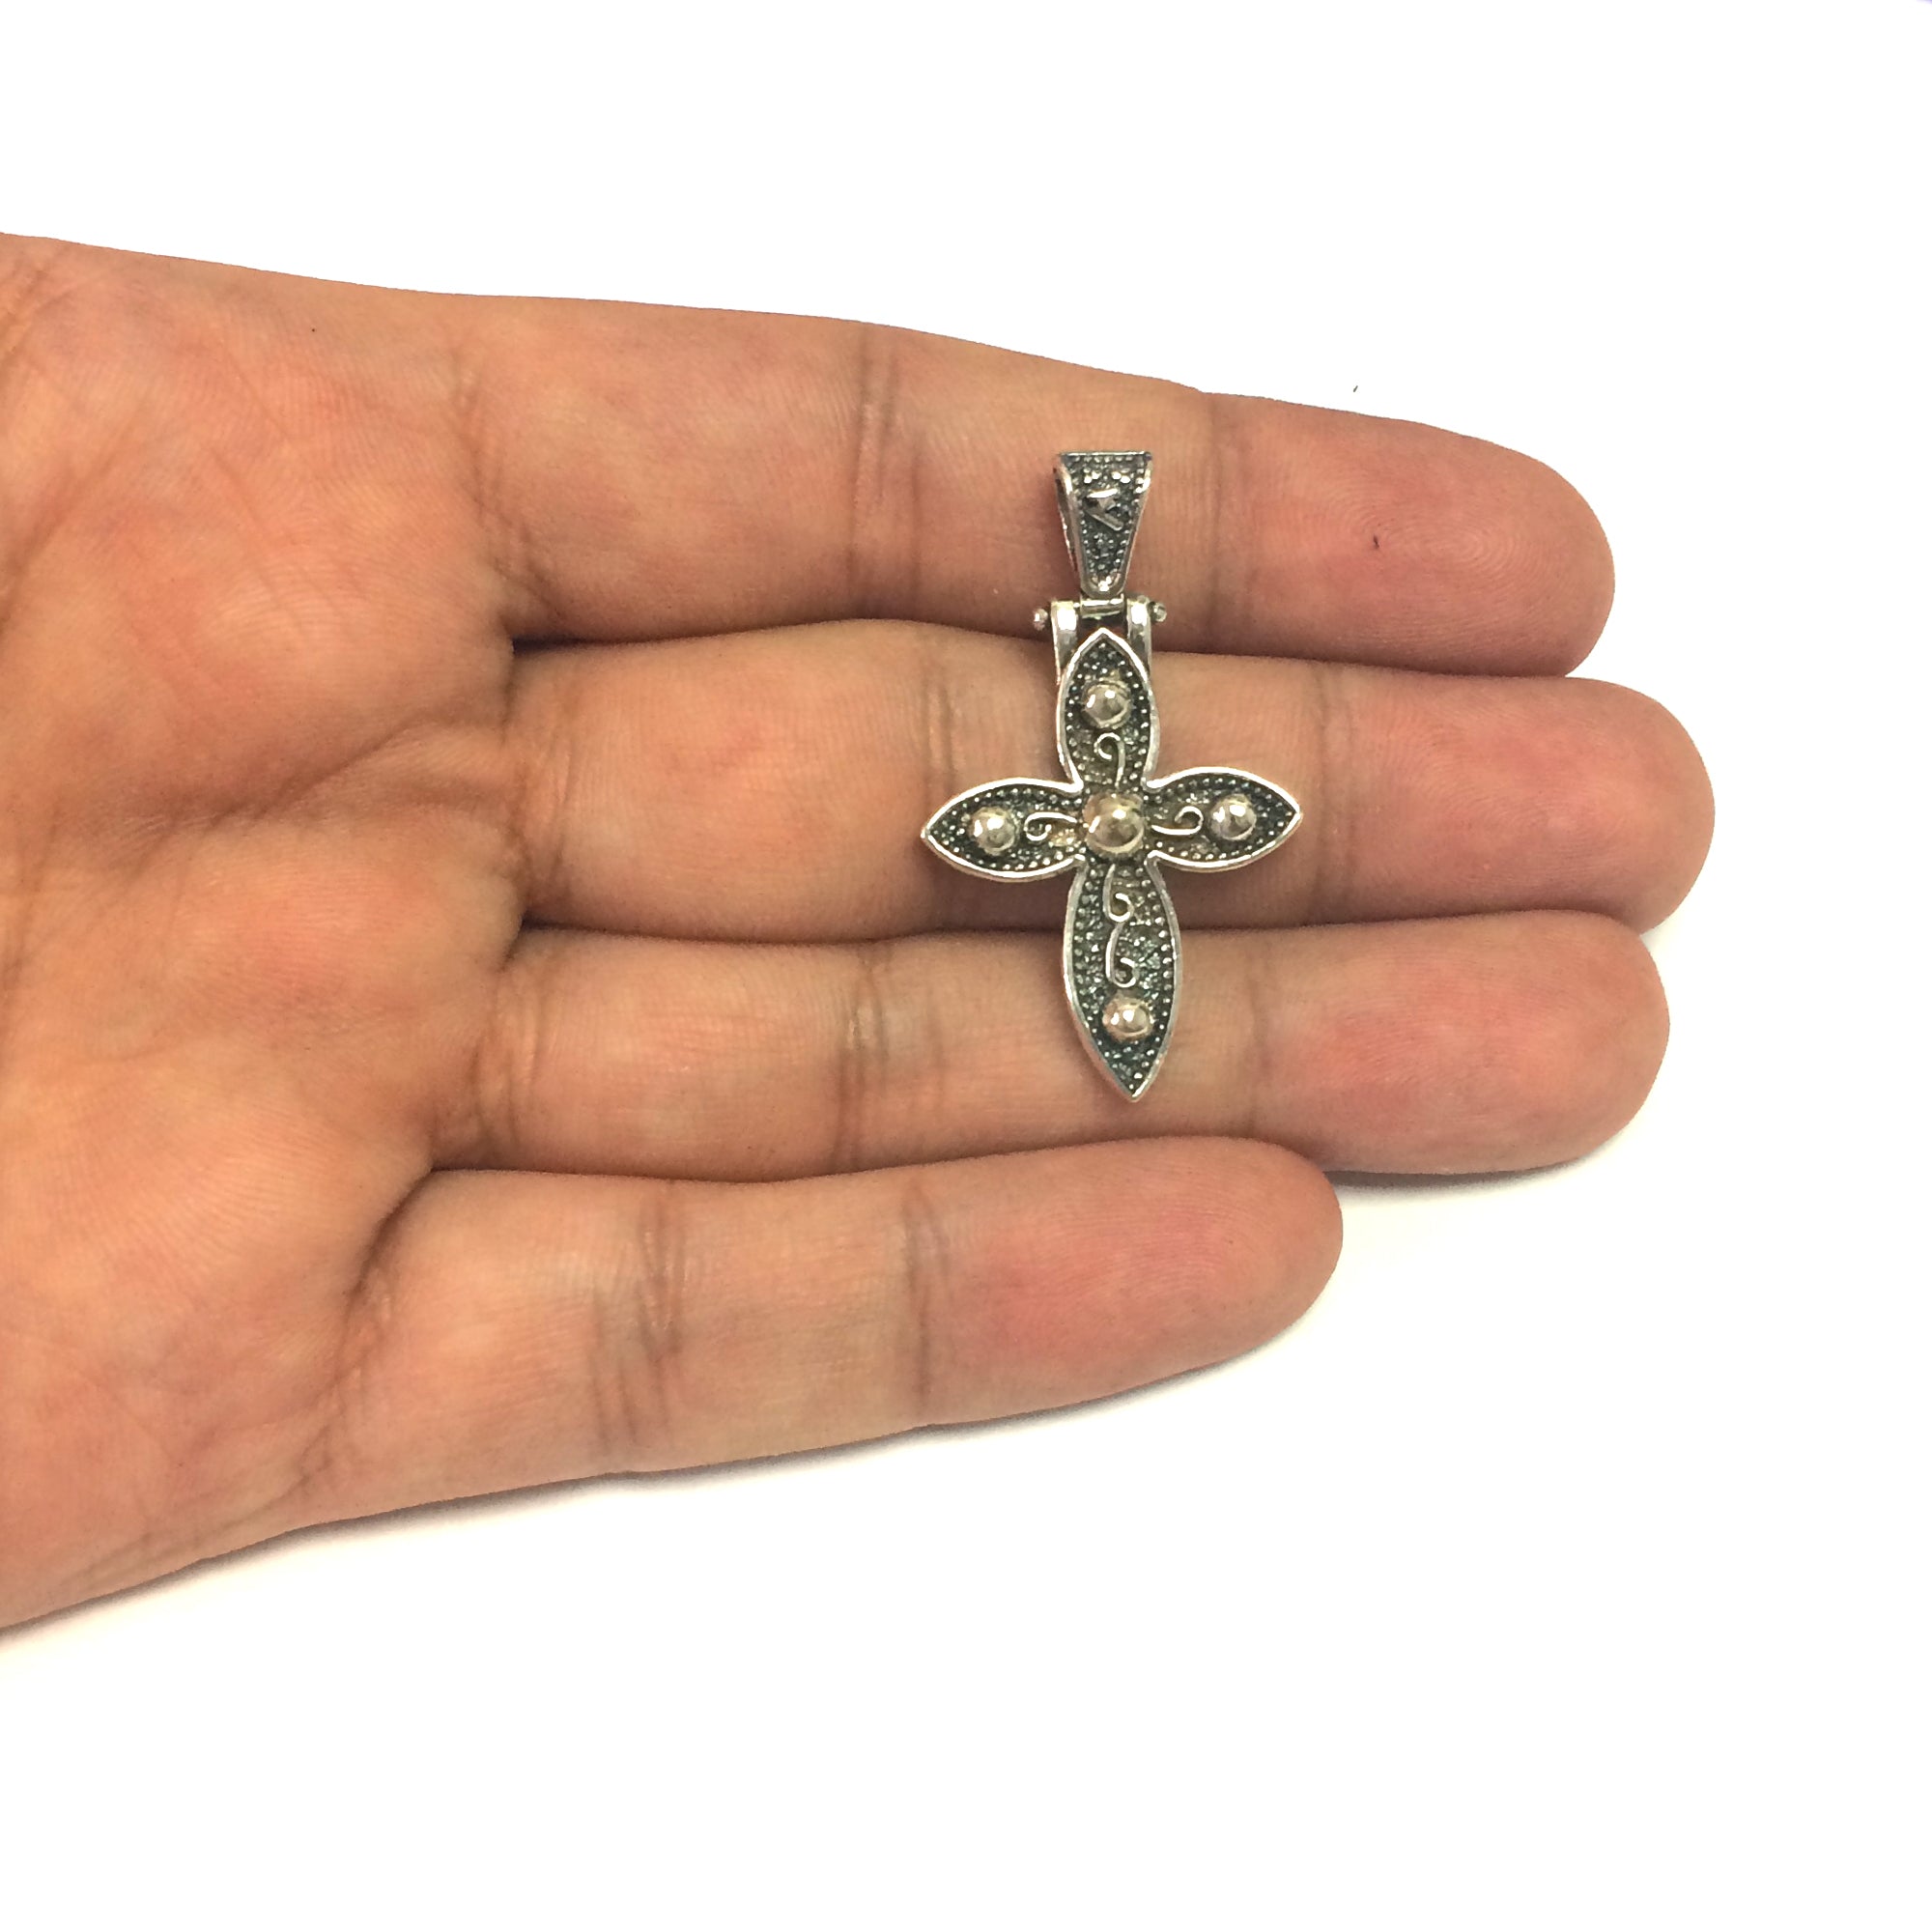 Oxidized Sterling Silver Byzantine Style Cross Pendant